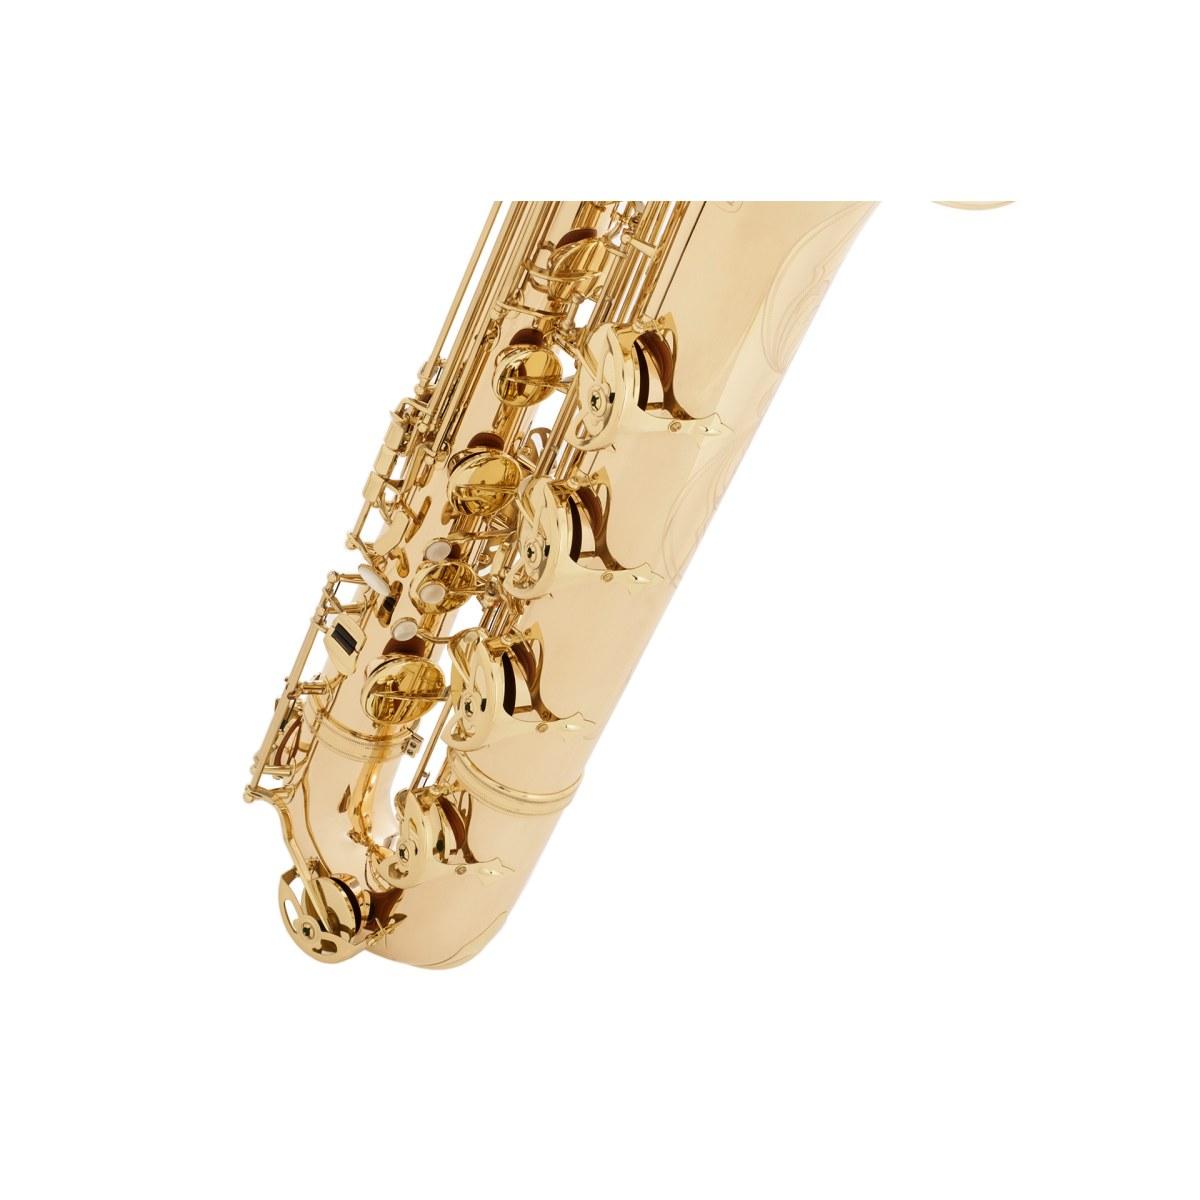 Borgani Royal Winds Pro RBS85 sax baritono bronzo